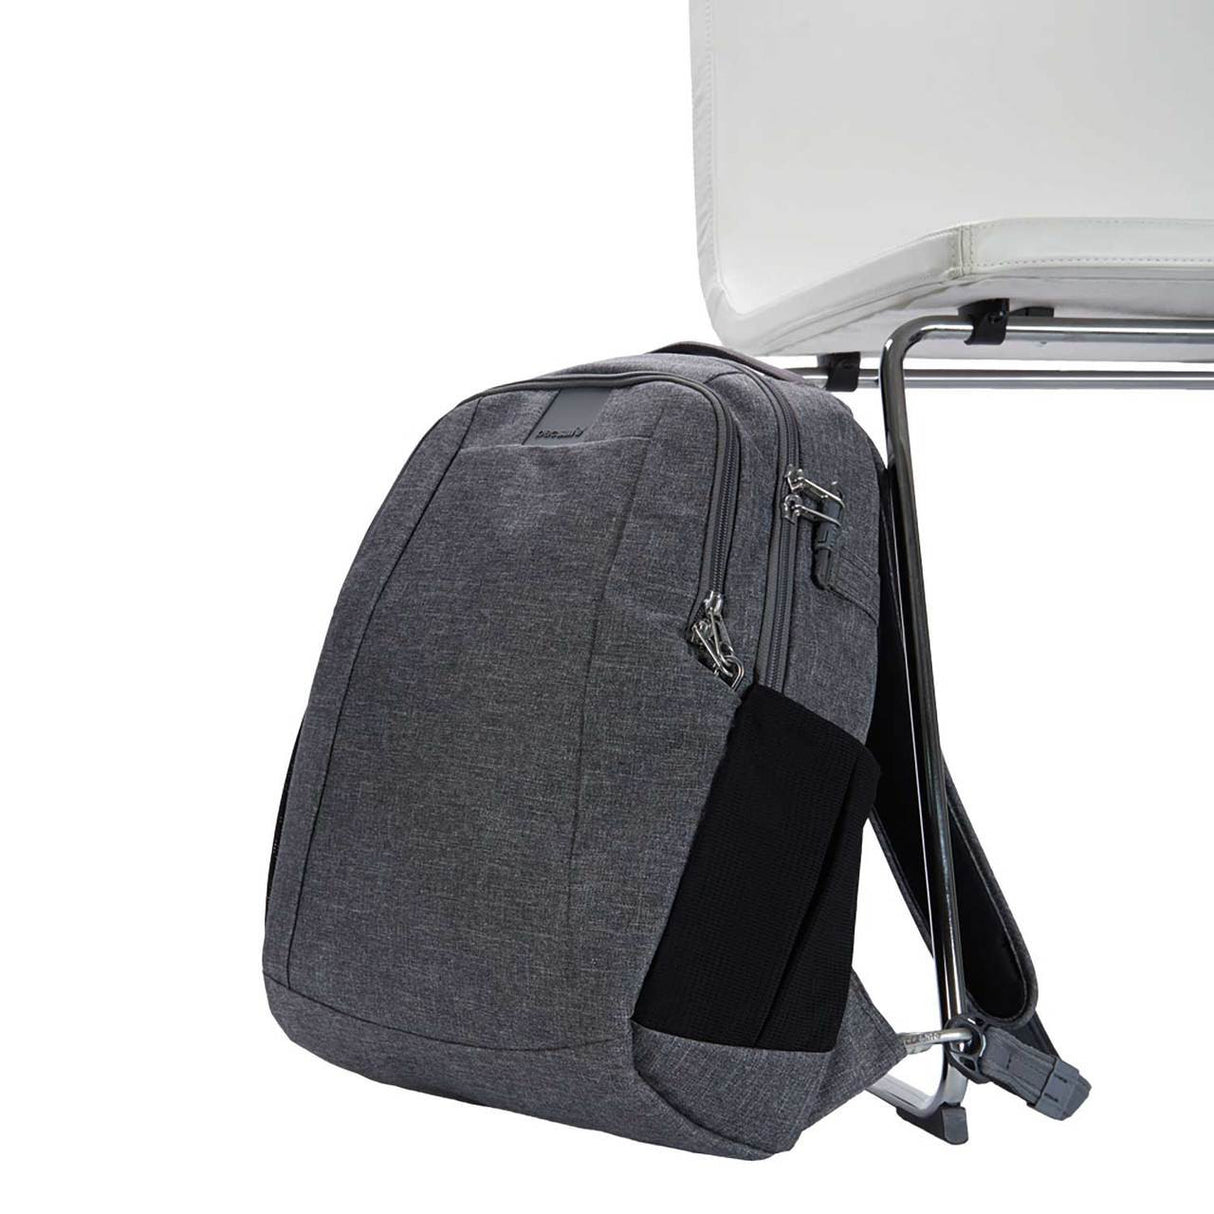 Pacsafe Metrosafe LS350 anti-theft 15L backpack